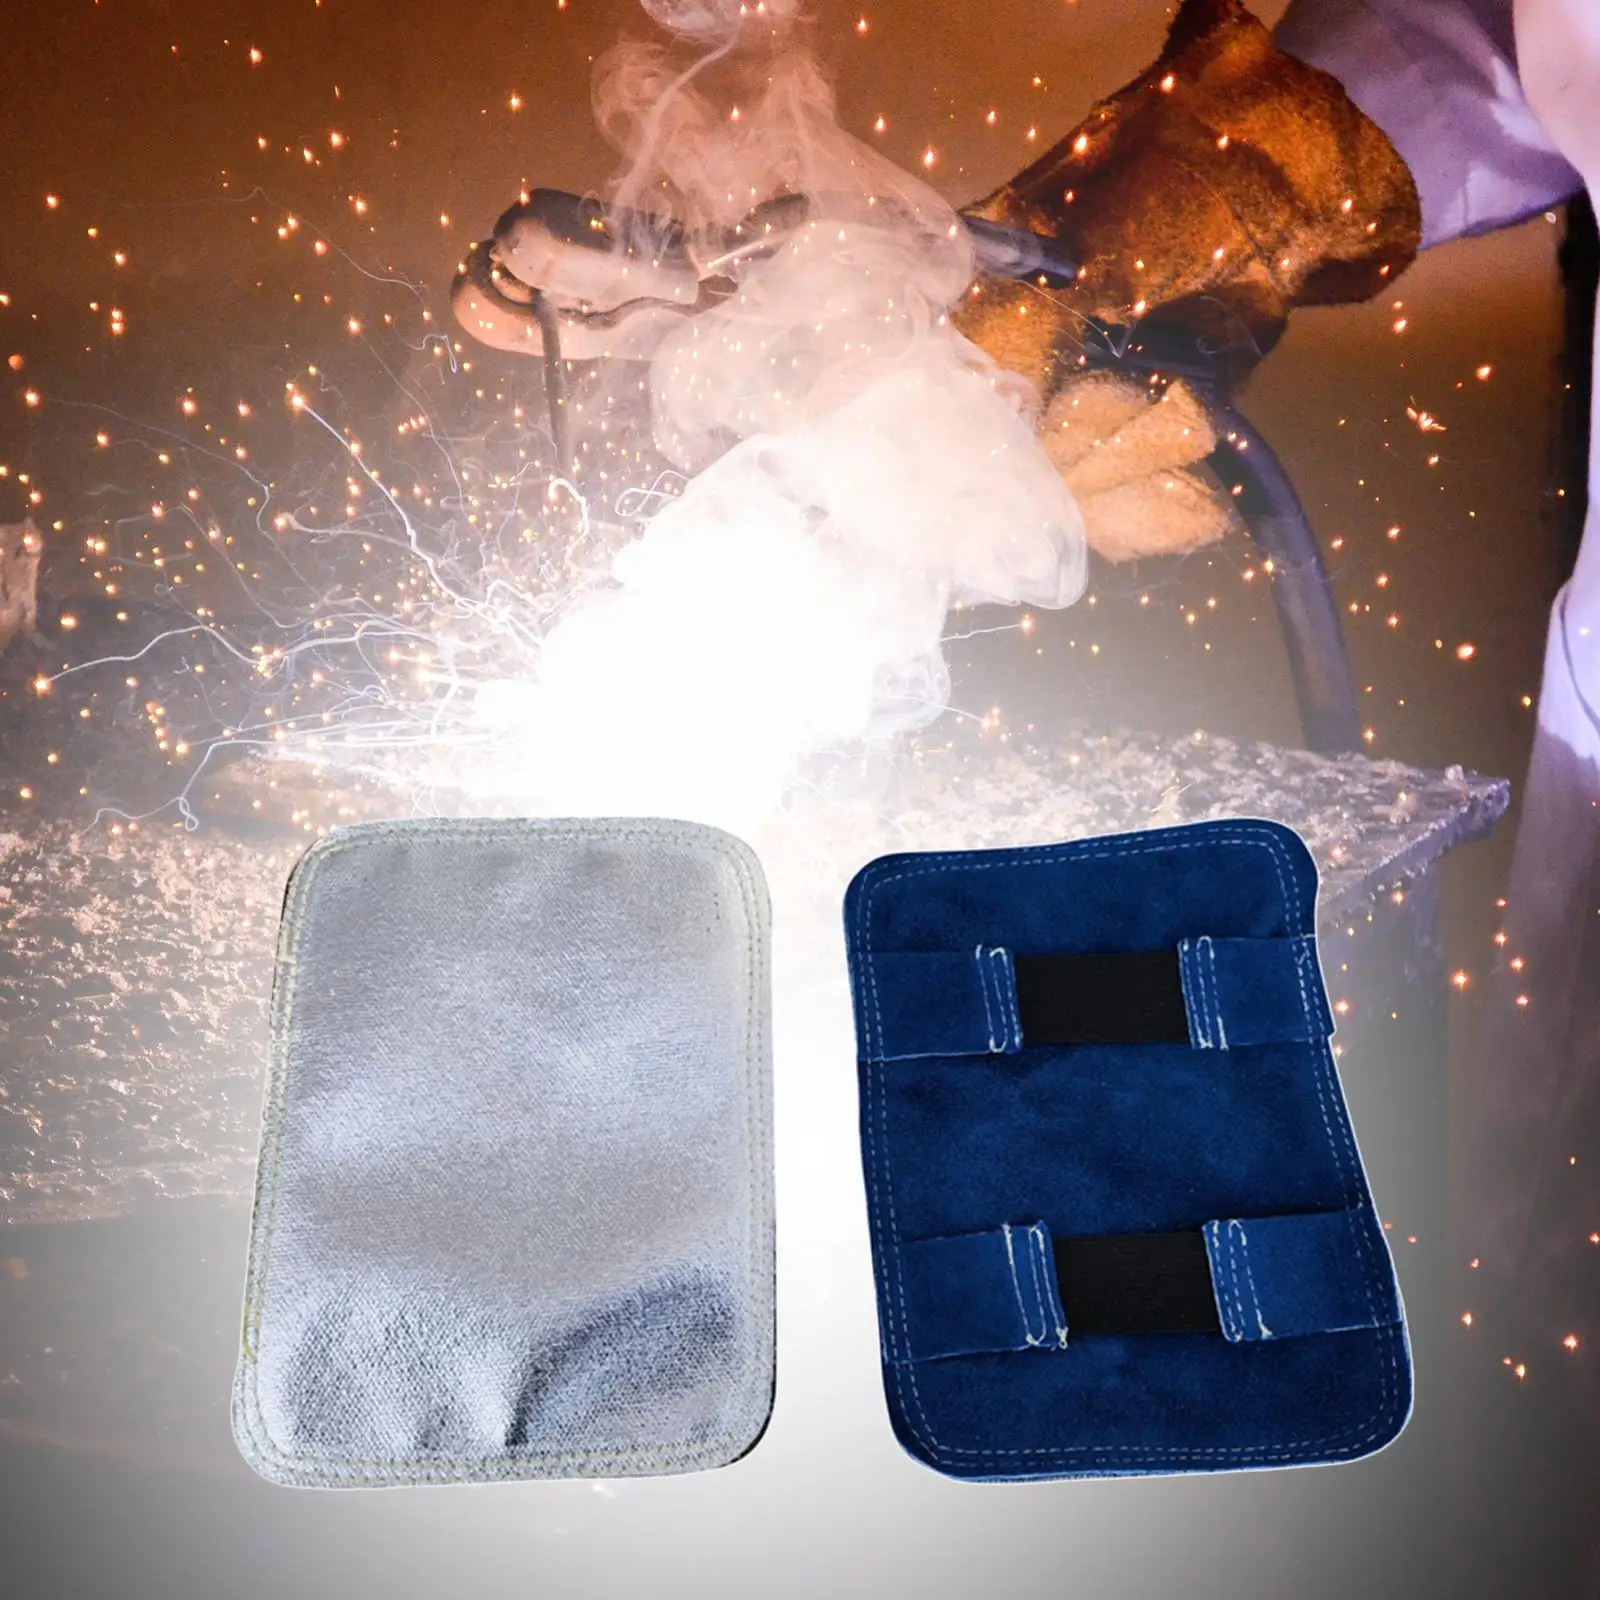 Fireproof Gloves Pad Welding Glove Heat Welding Gloves Pad for Welding Metal Smelting Camping Industrial Boiler Welder Furnace